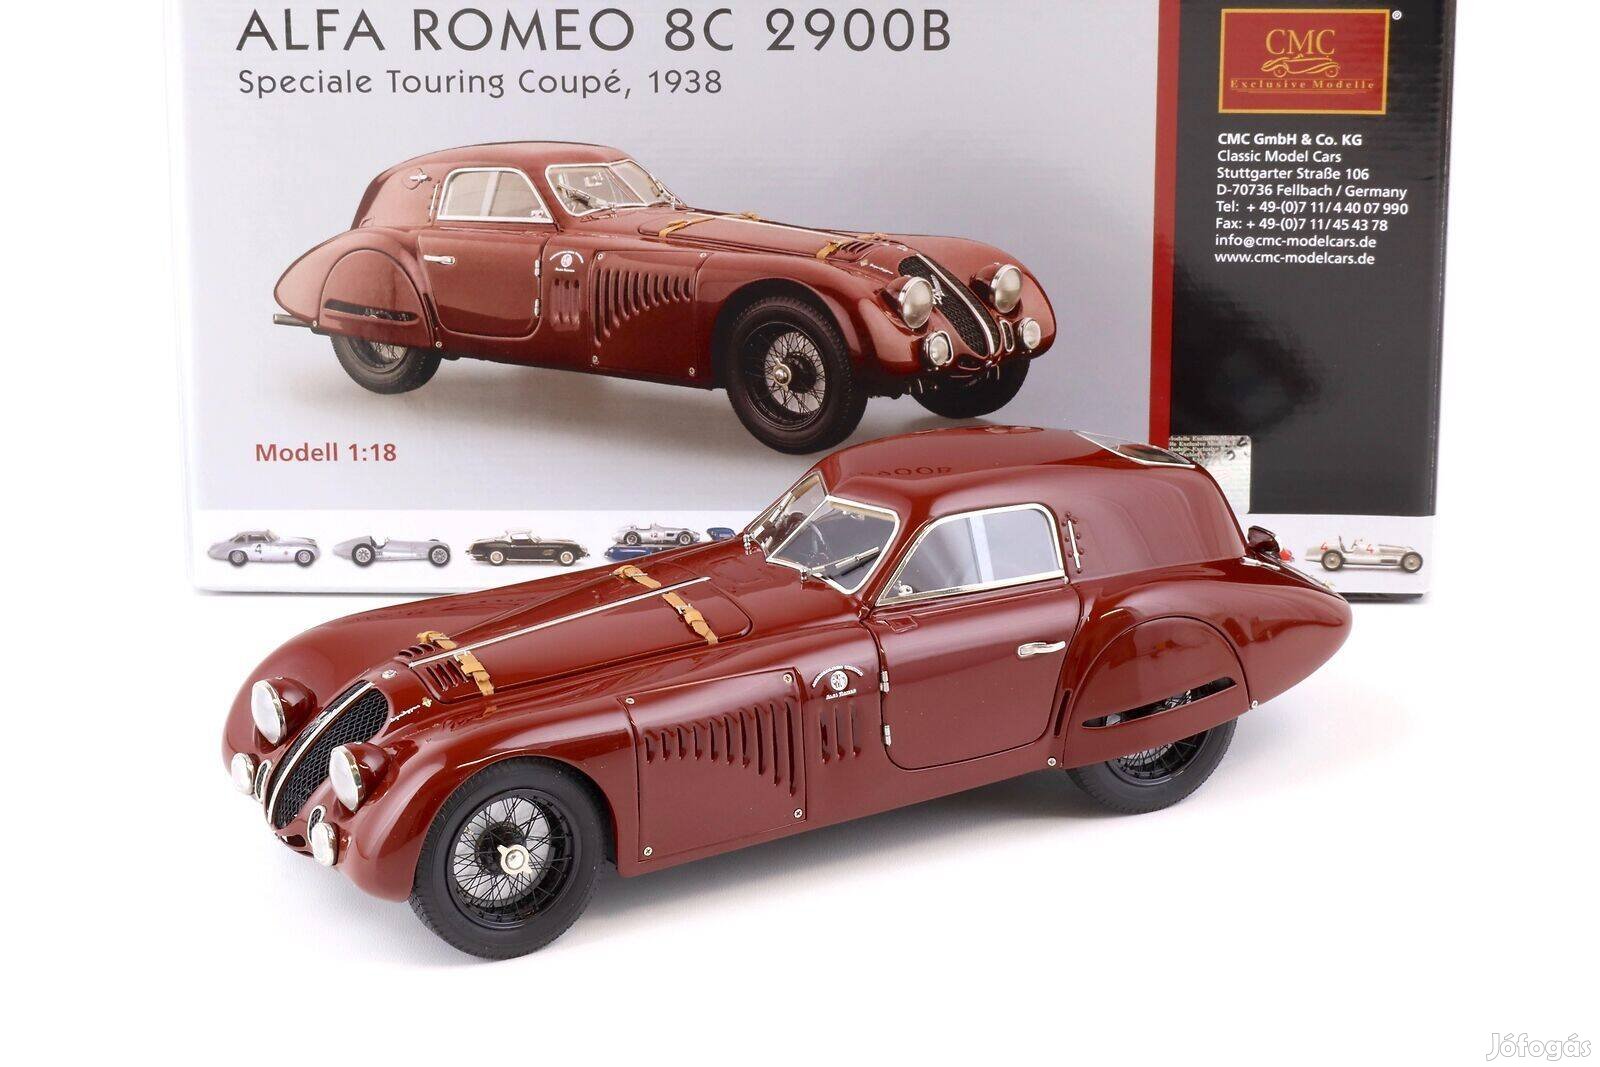 Alfa Romeo 8C 2900 B Speciale Touring Coupé 1938 1:18 CMC M-107